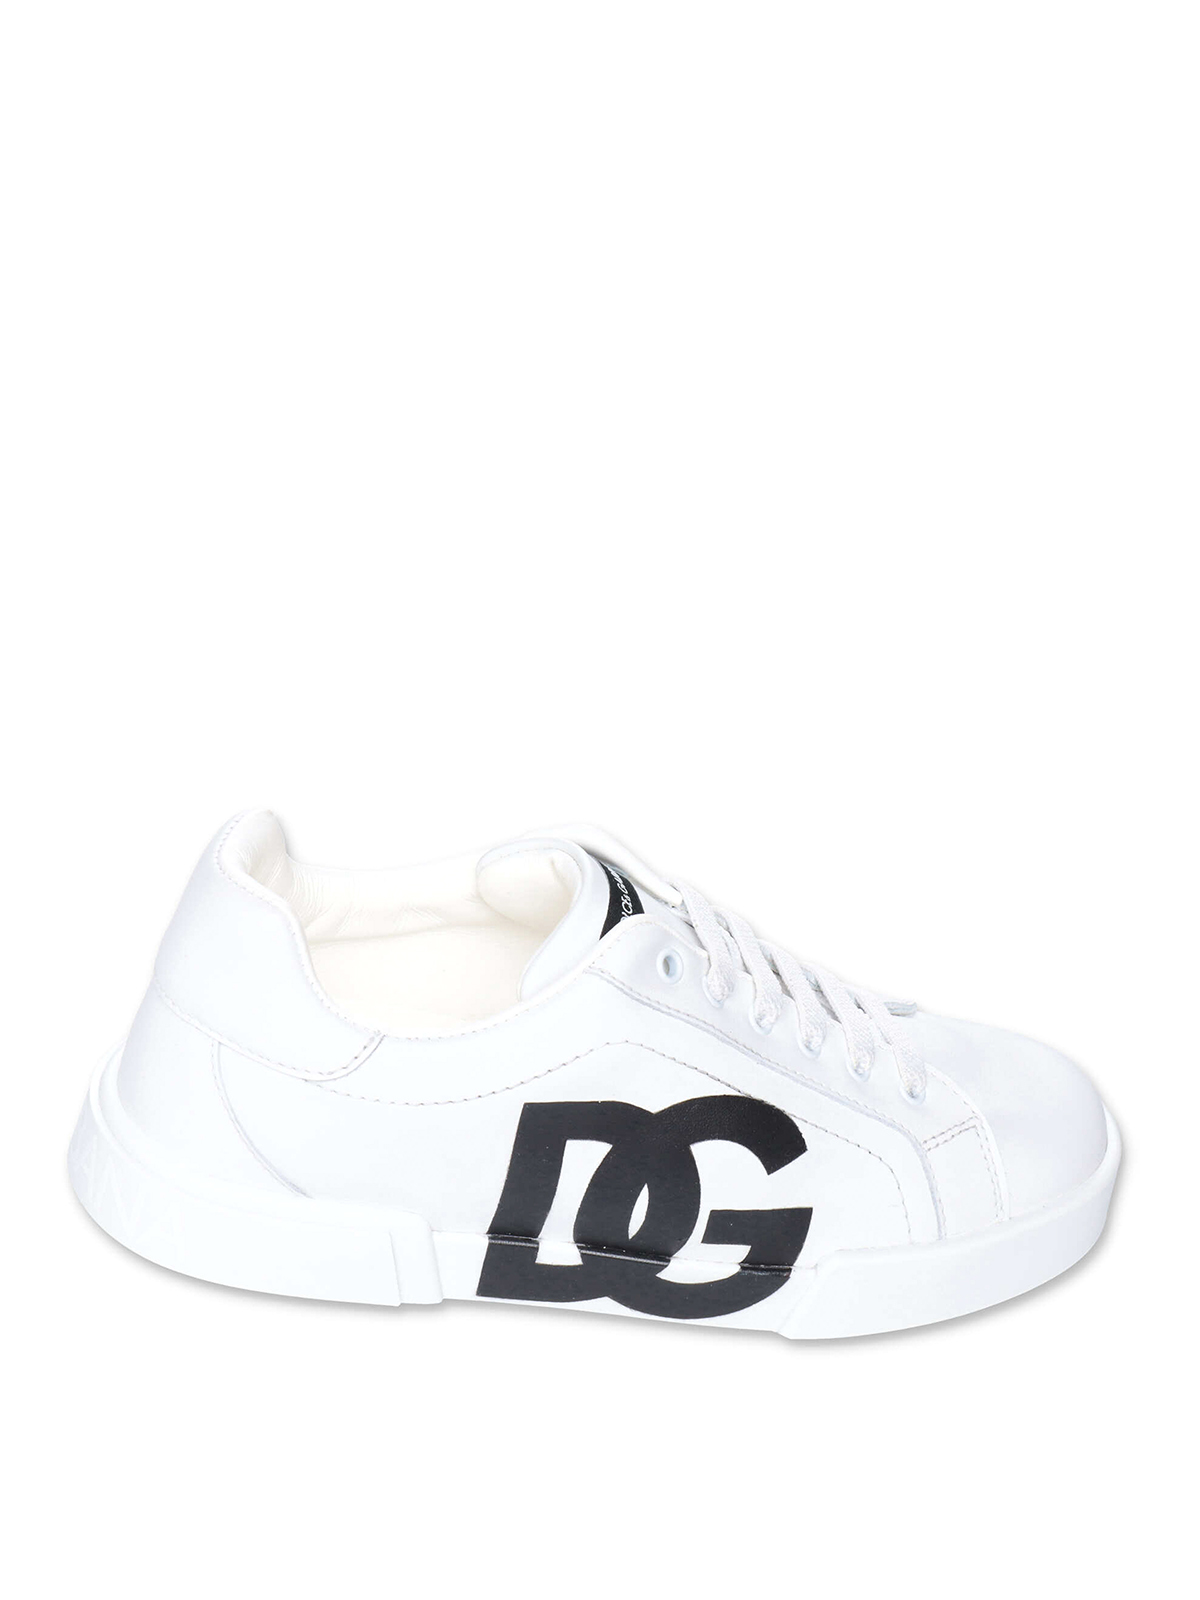 Trainers Dolce & Gabbana - White leather sneakers - DA0702AC33089642T